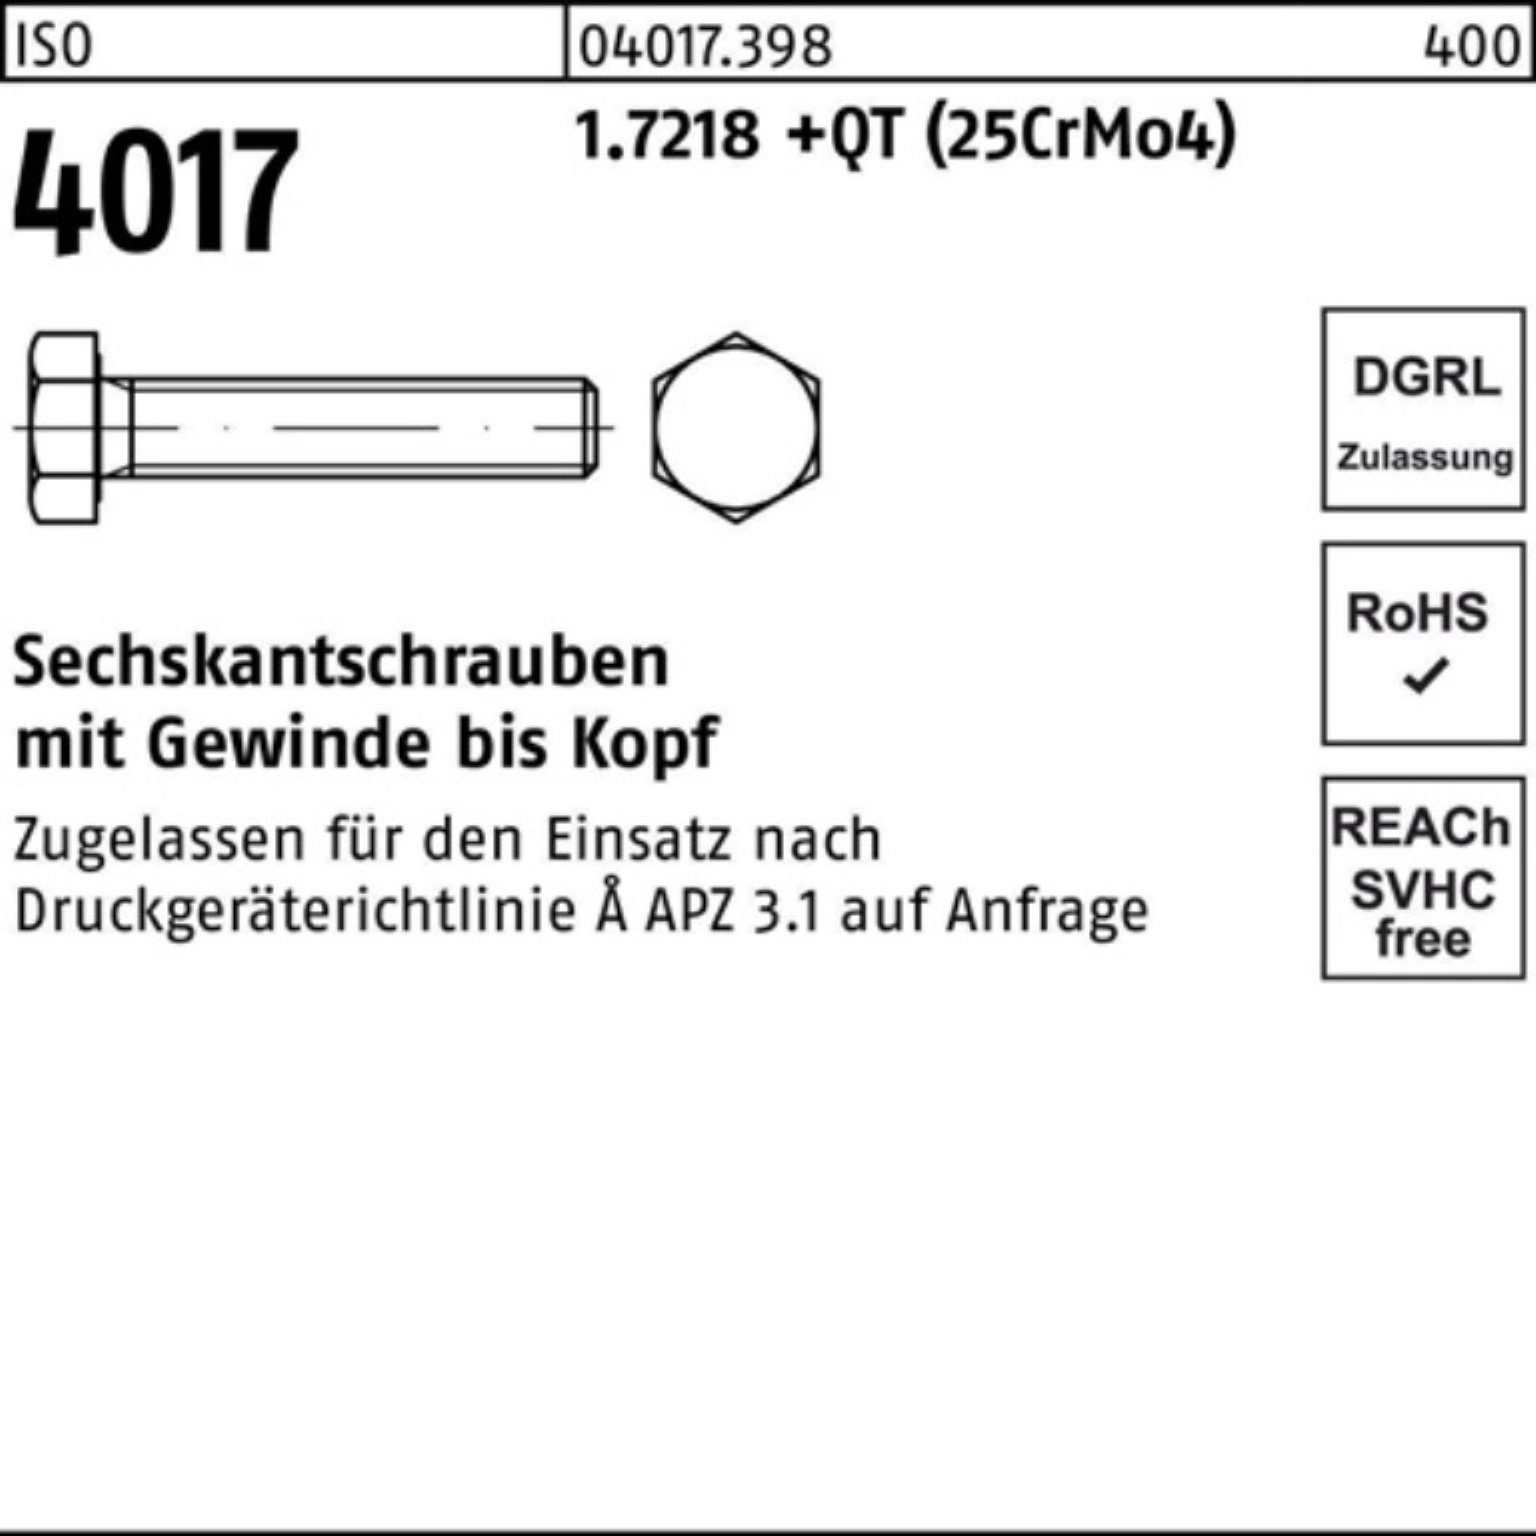 Bufab Sechskantschraube 100er Sechskantschraube (25CrMo4) Pack 1.7218 M20x VG 180 4017 ISO +QT